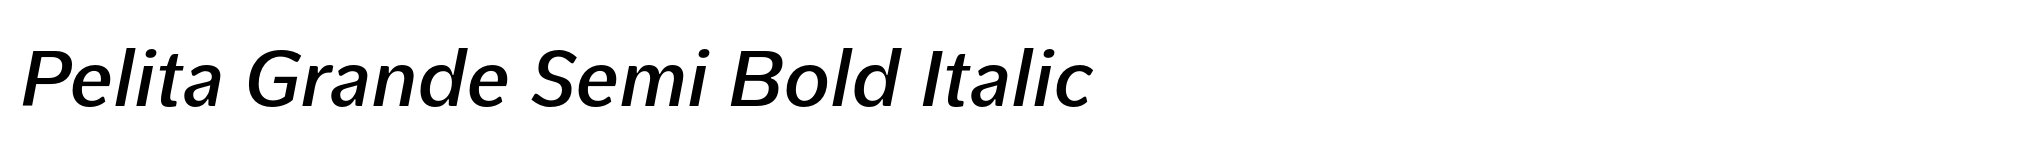 Pelita Grande Semi Bold Italic image